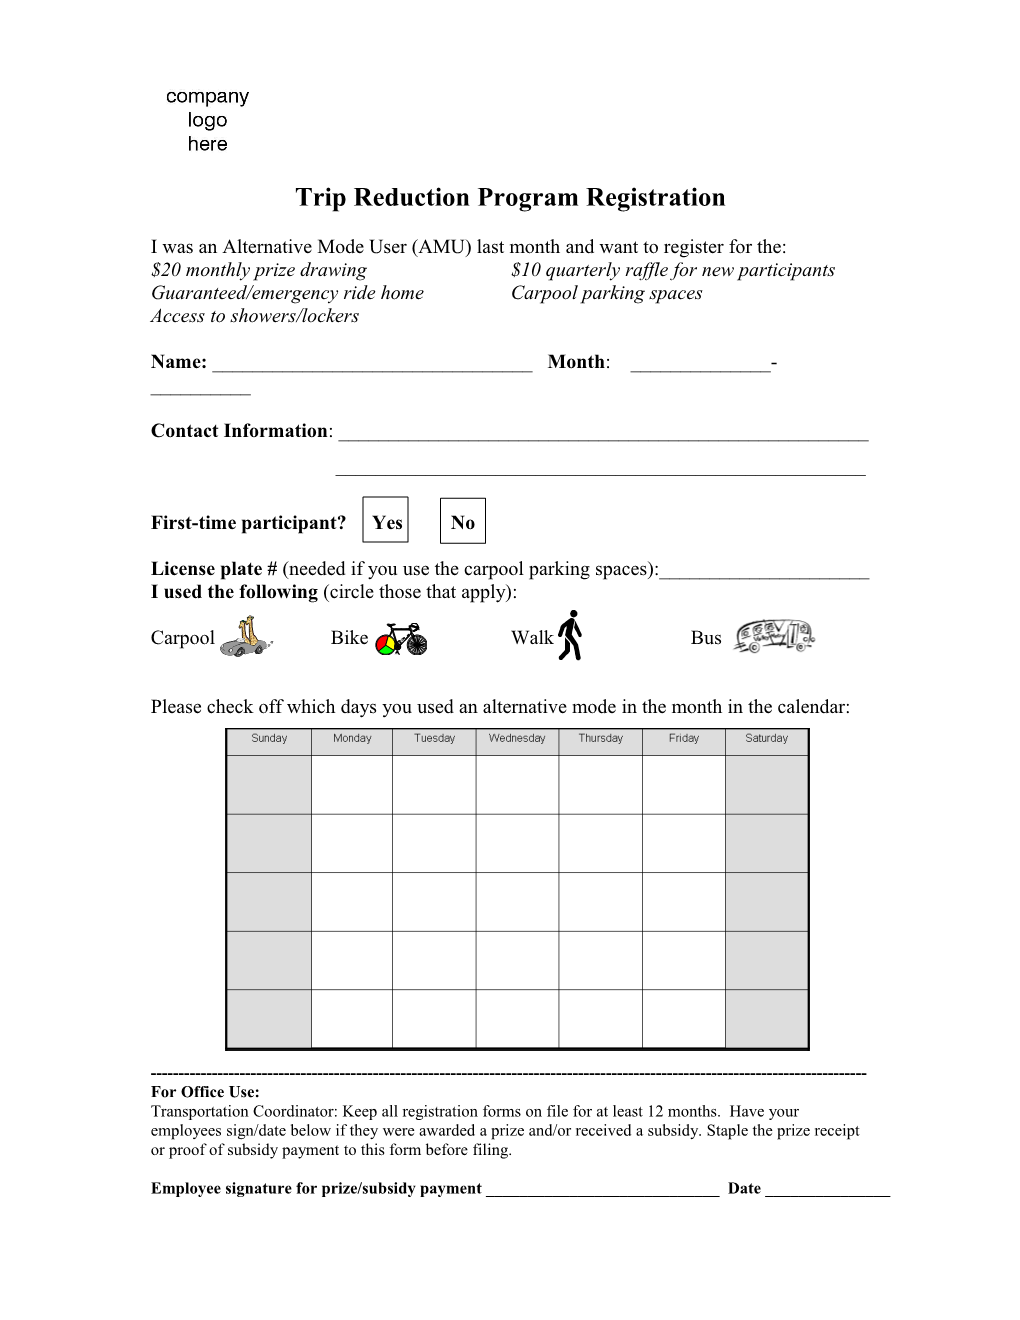 Trip Reduction Program Registration